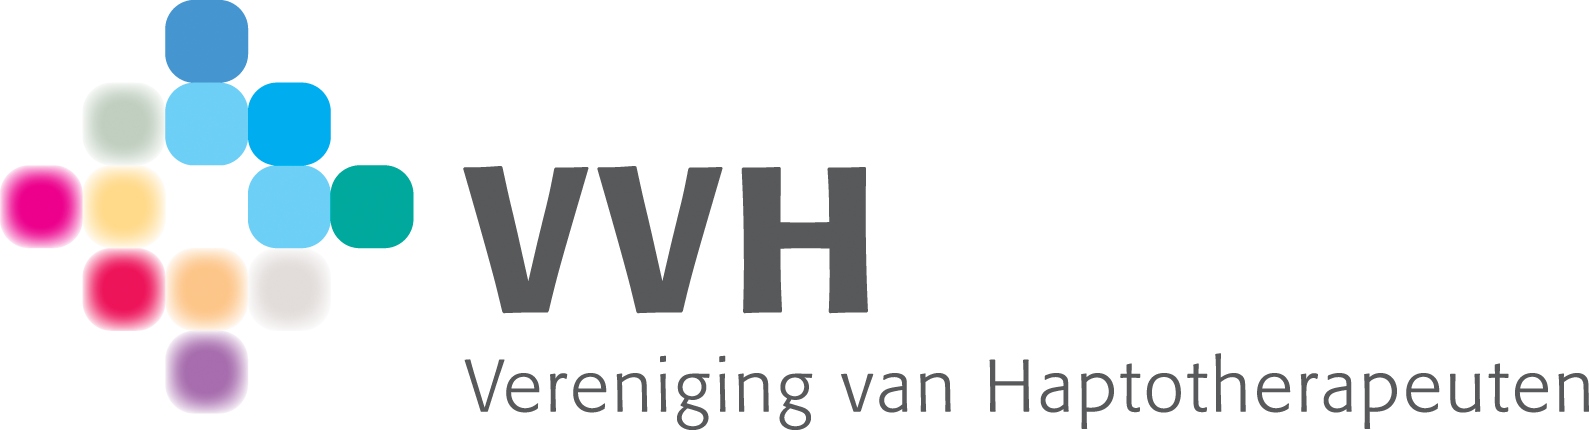 VVH logo-rgb